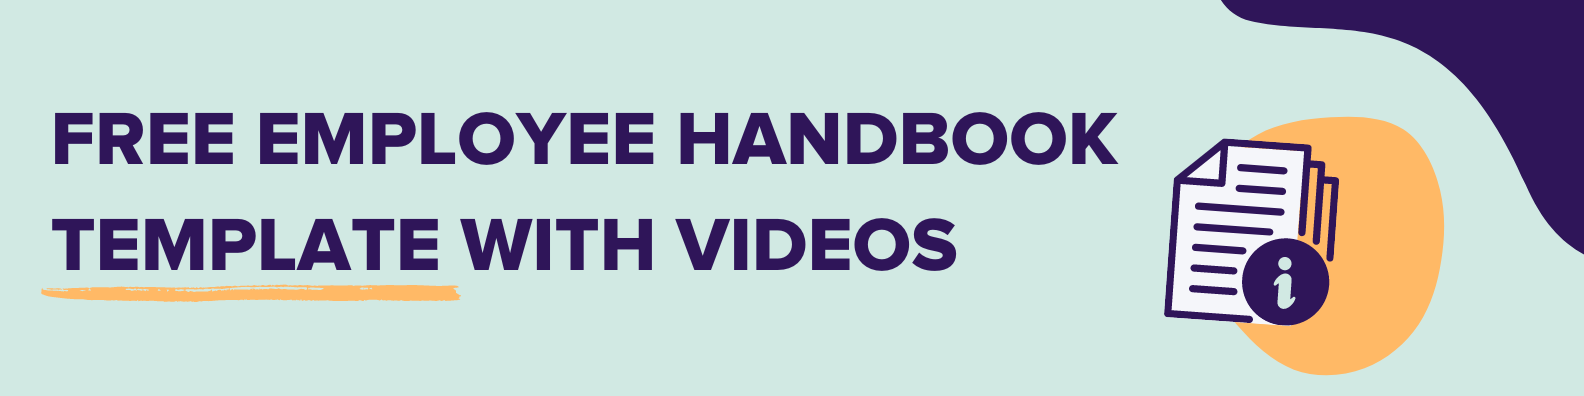 FREE EMPLOYEE HANDBOOK TEMPLATE WITH VIDEOS